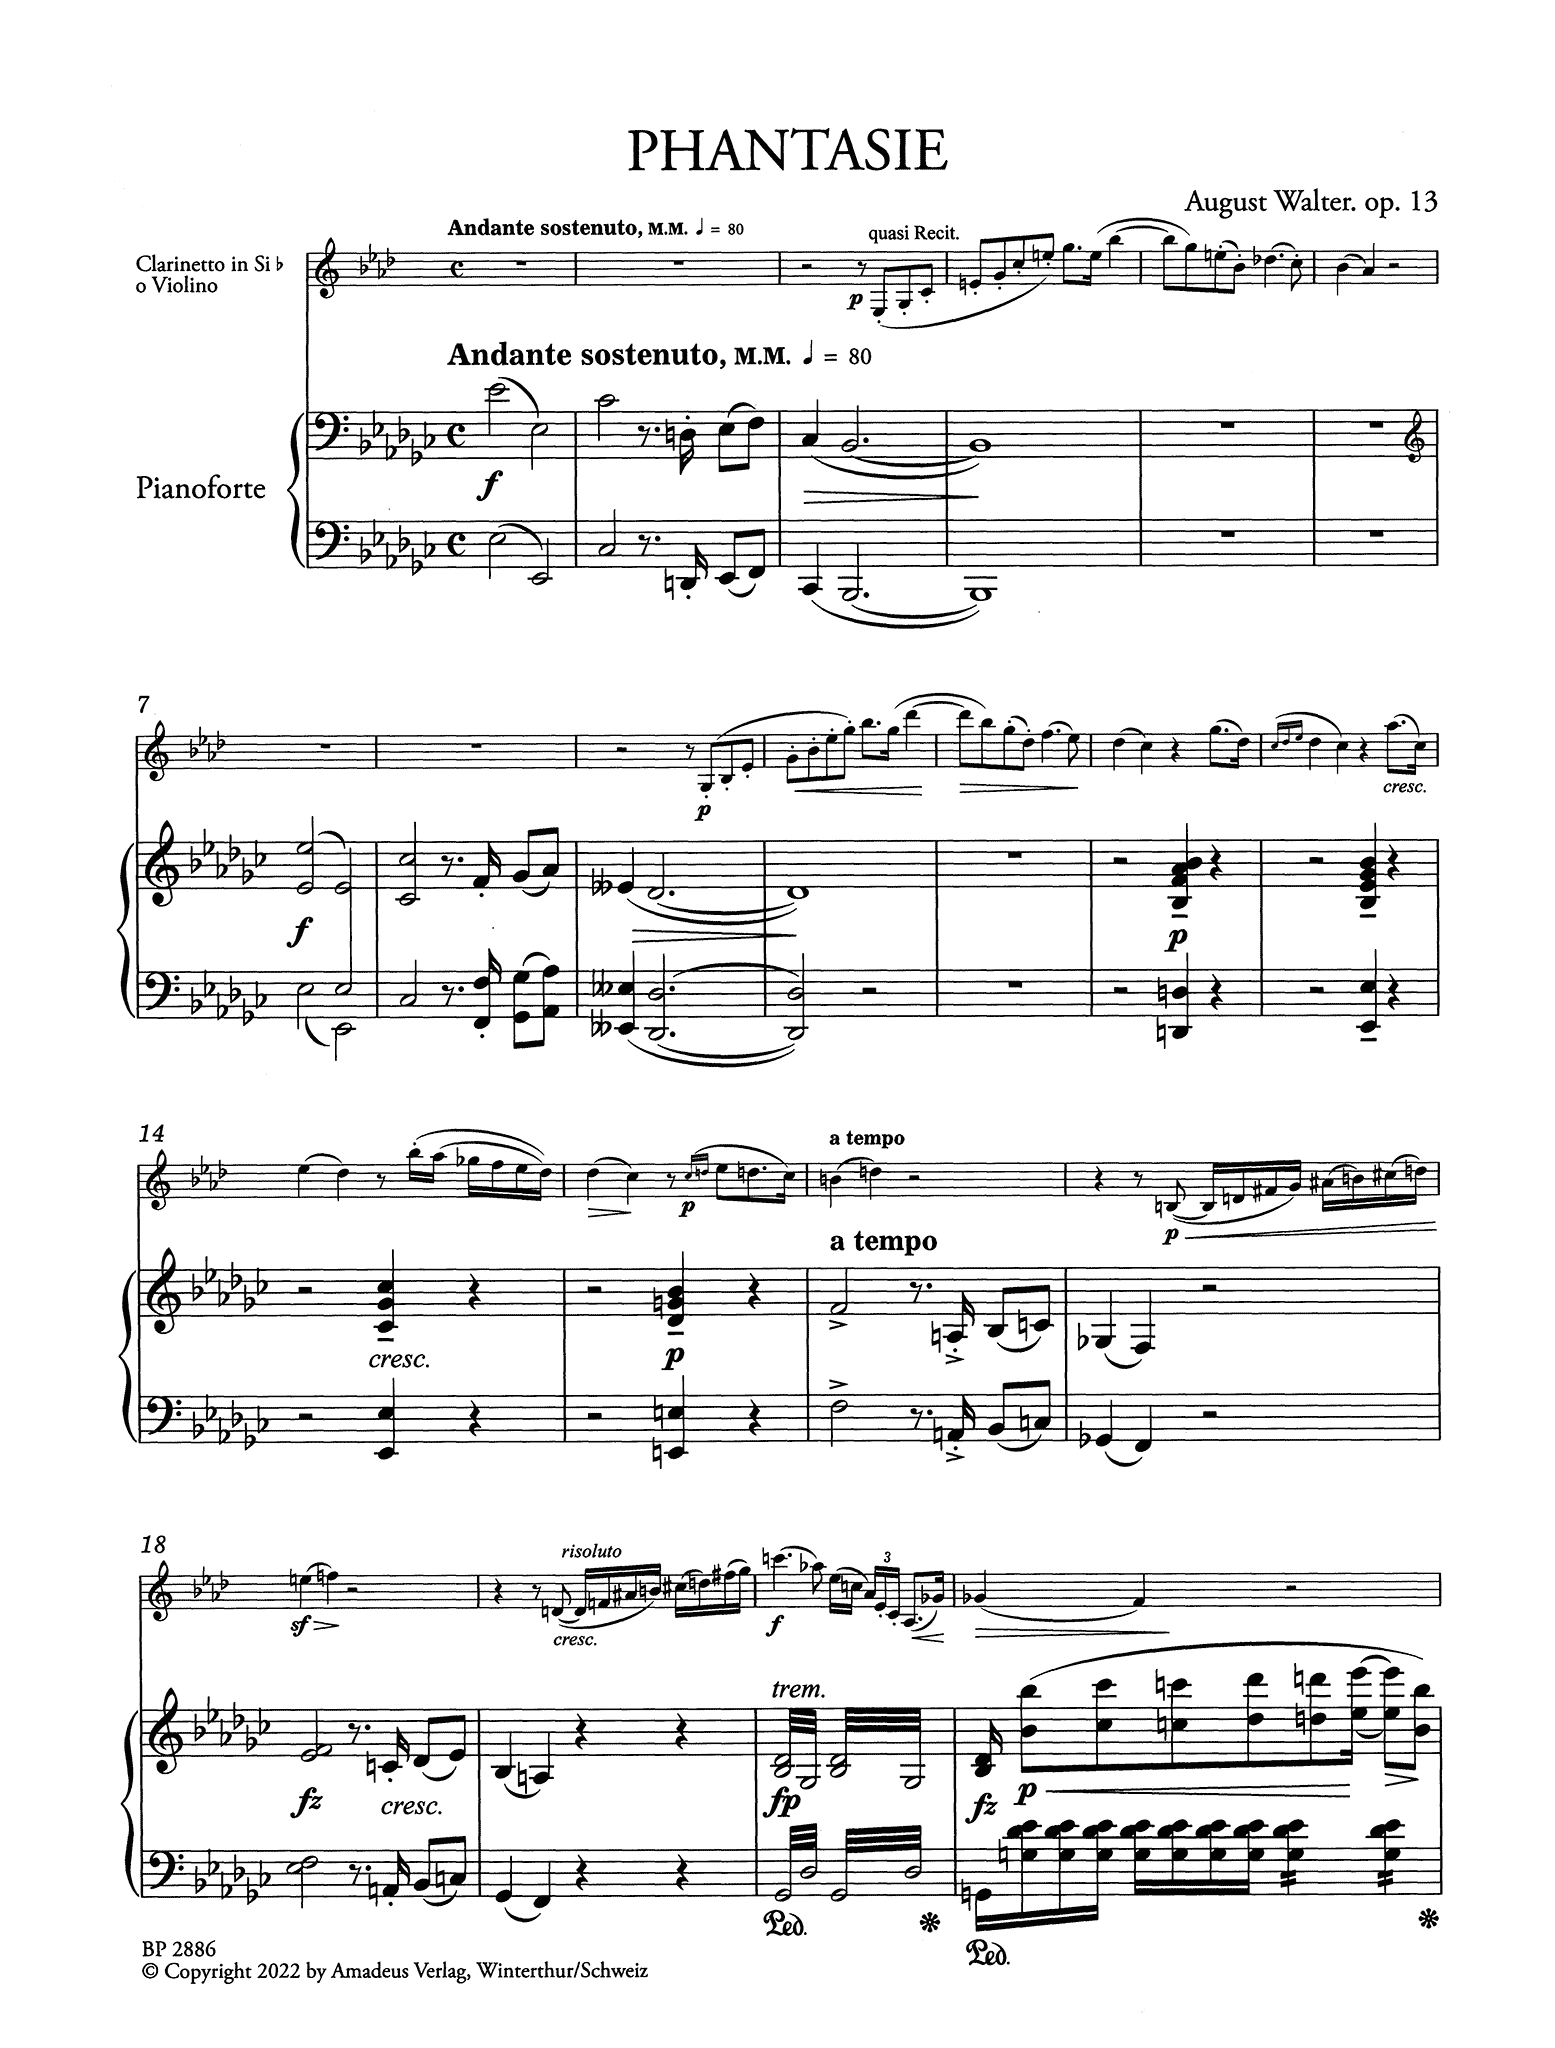 August Walter Fantasy & Capriccio, Op. 13 clarinet & piano - Movement 1